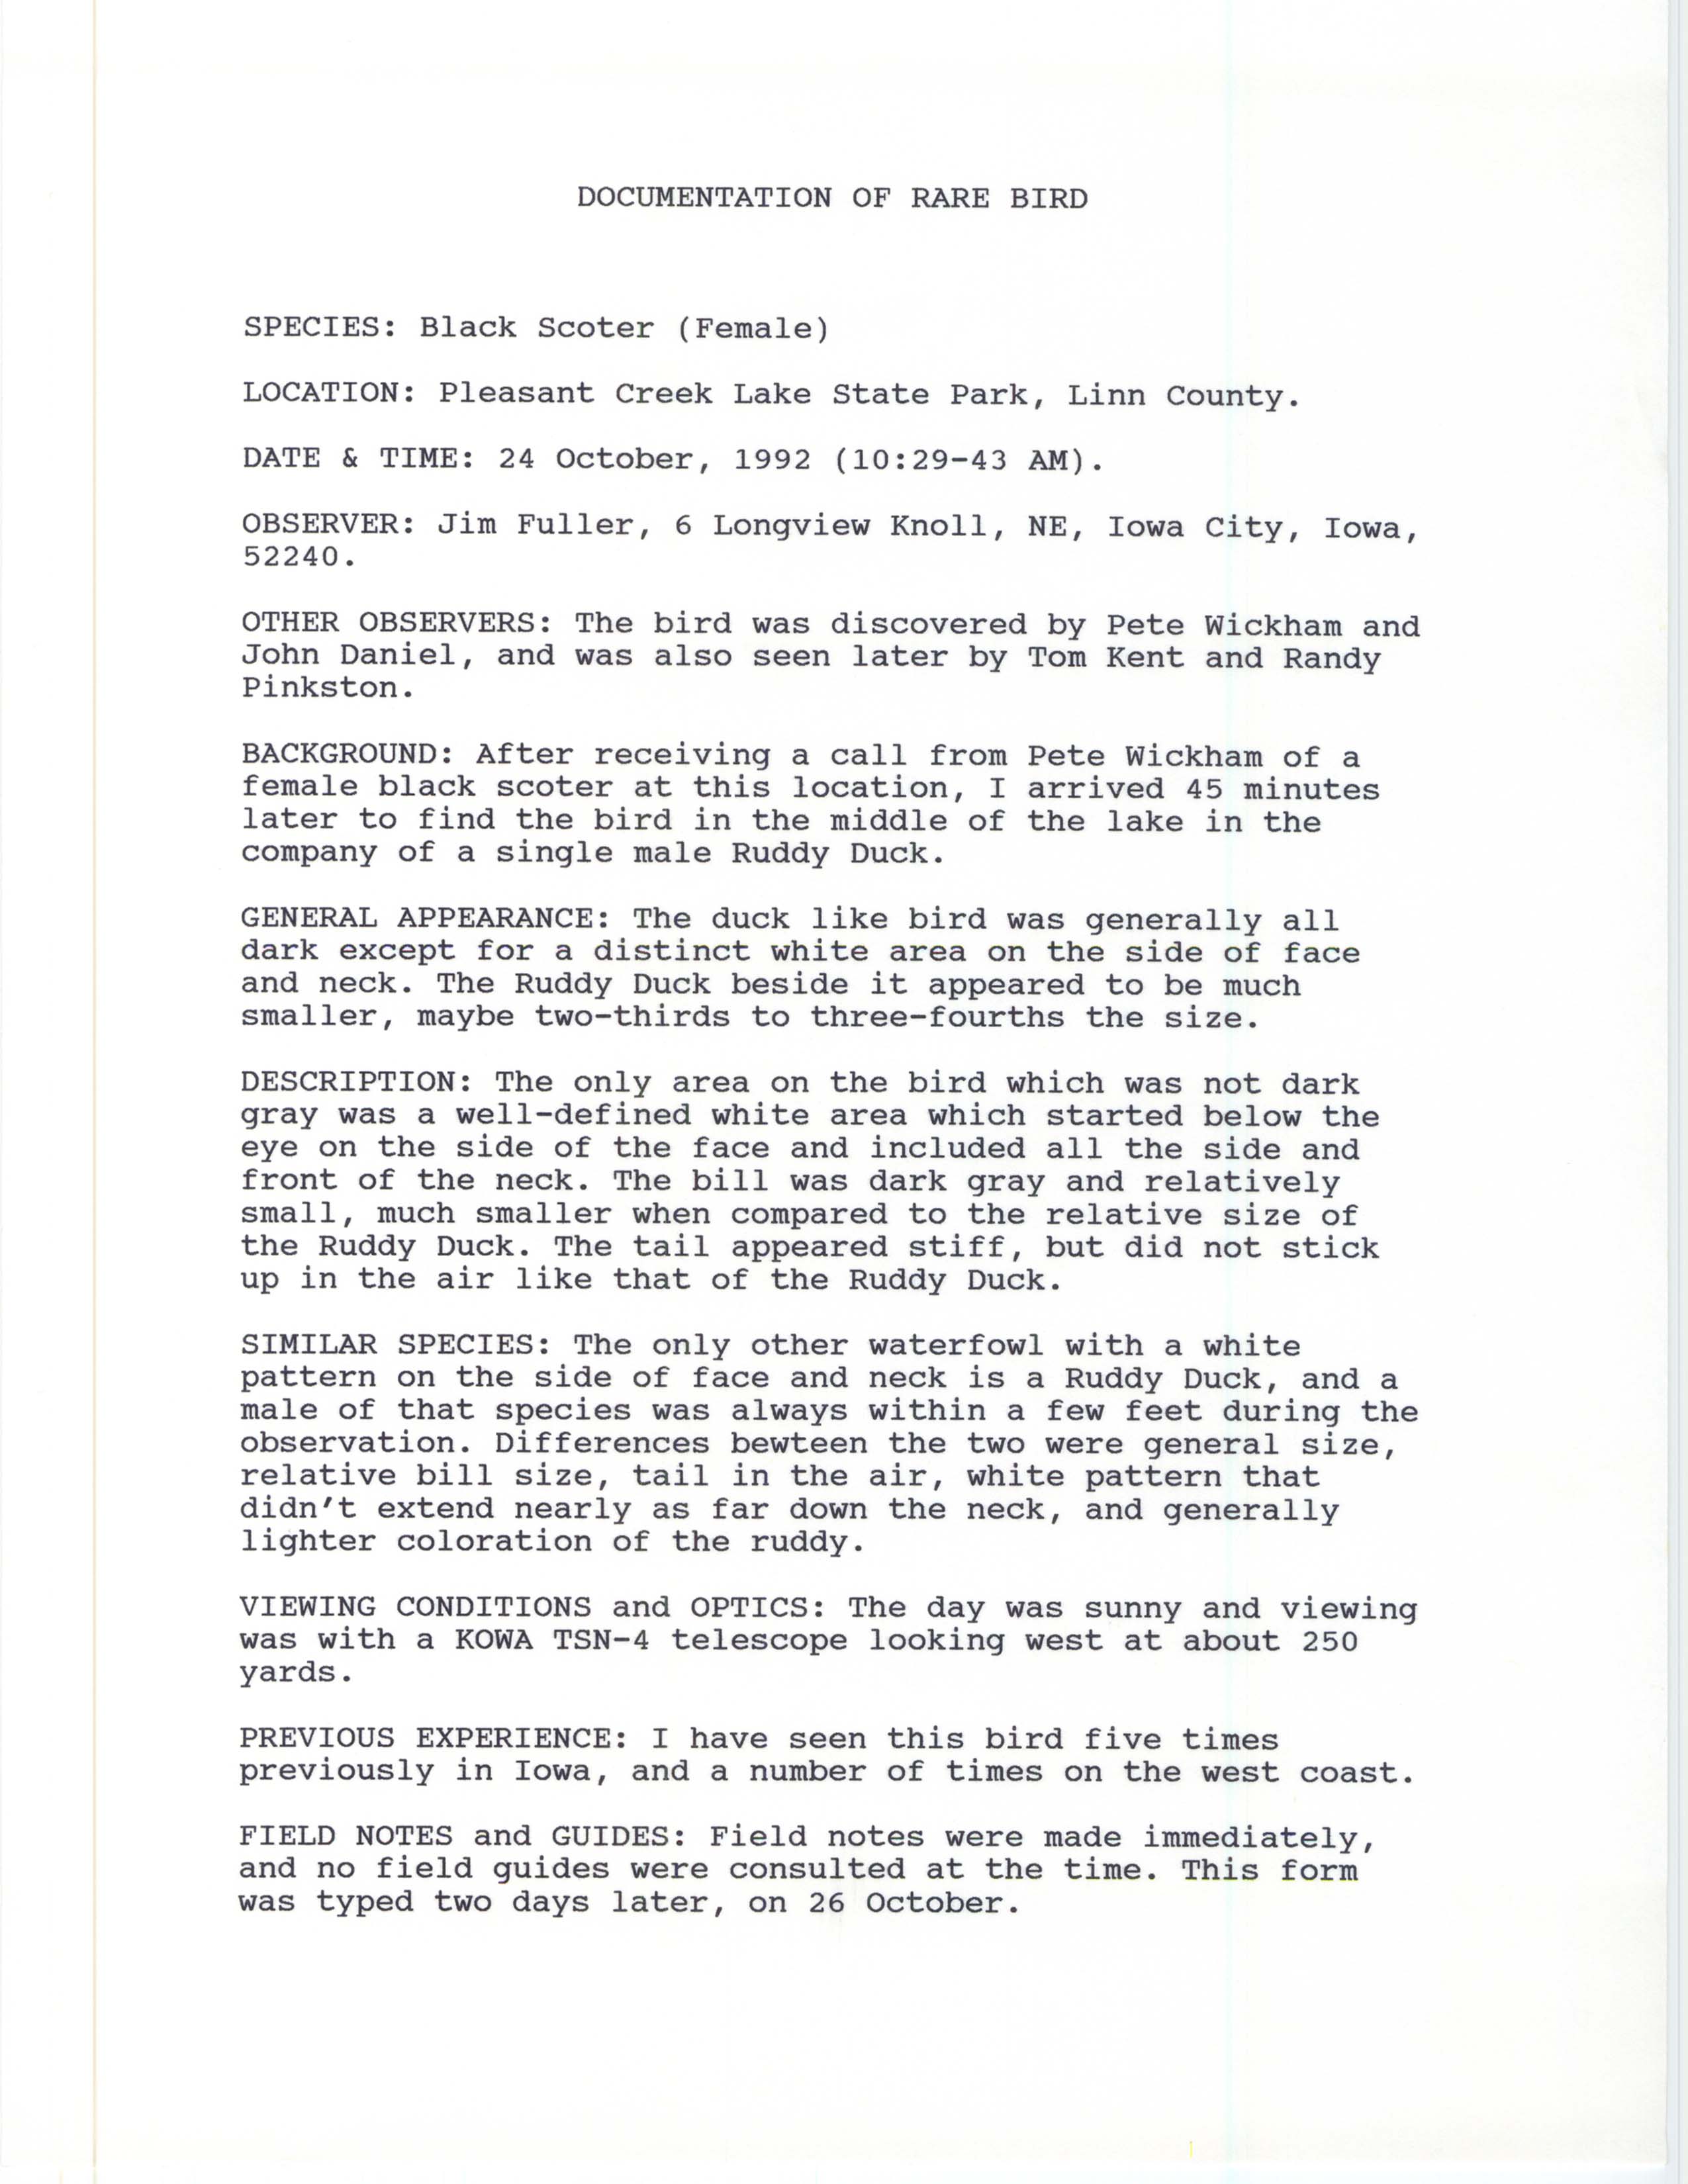 Rare bird documentation form for Black Scoter at Pleasant Creek Lake State Park, 1992